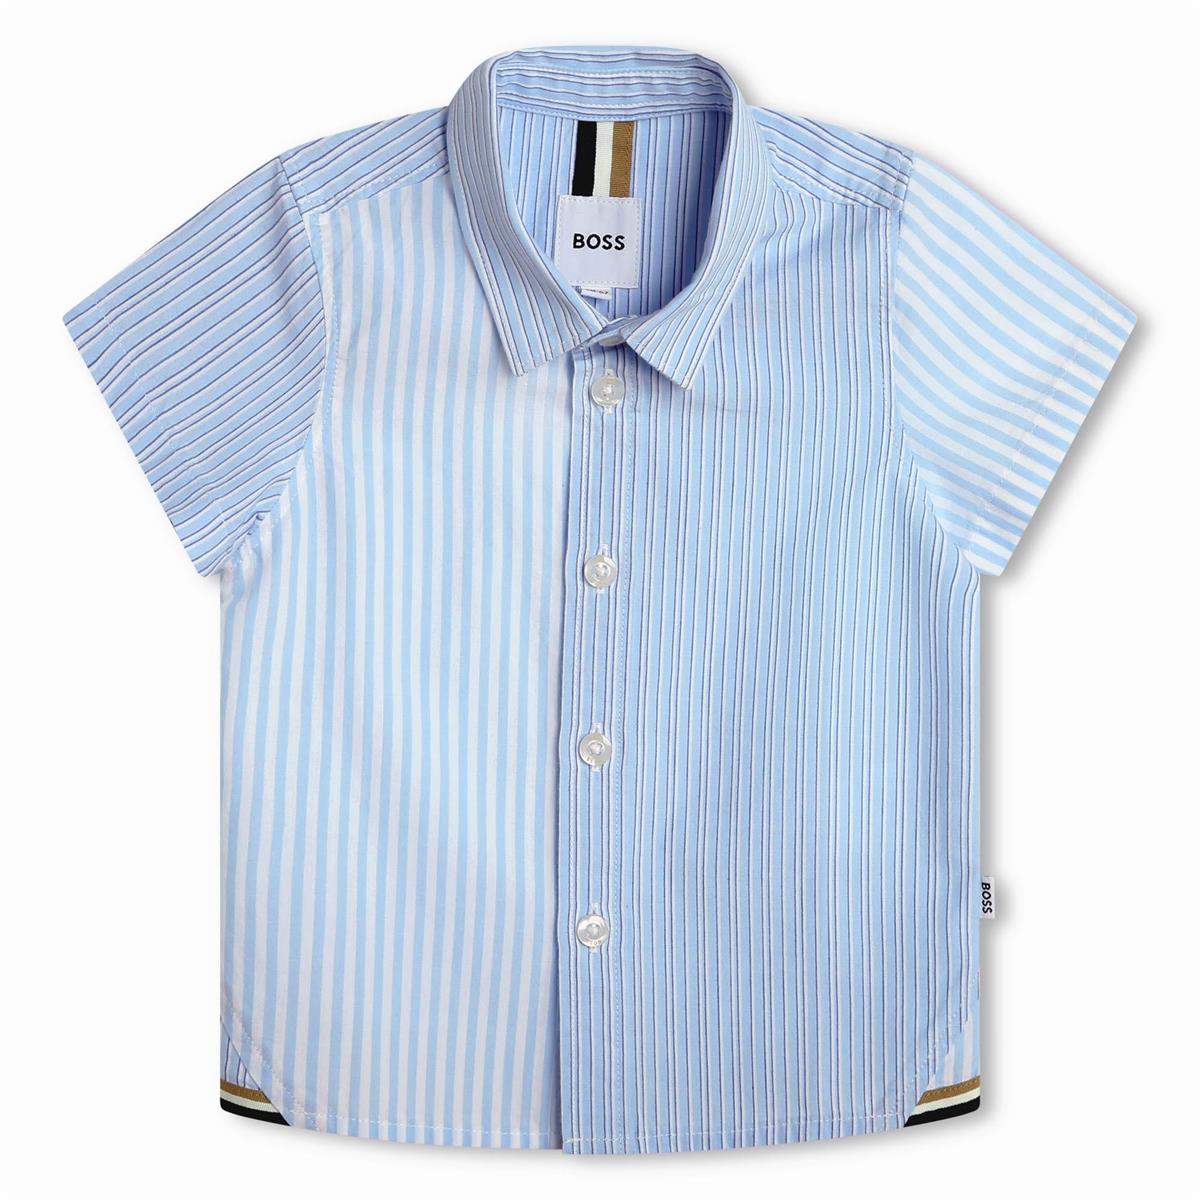 Baby Boys Blue Stripes Cotton Shirt